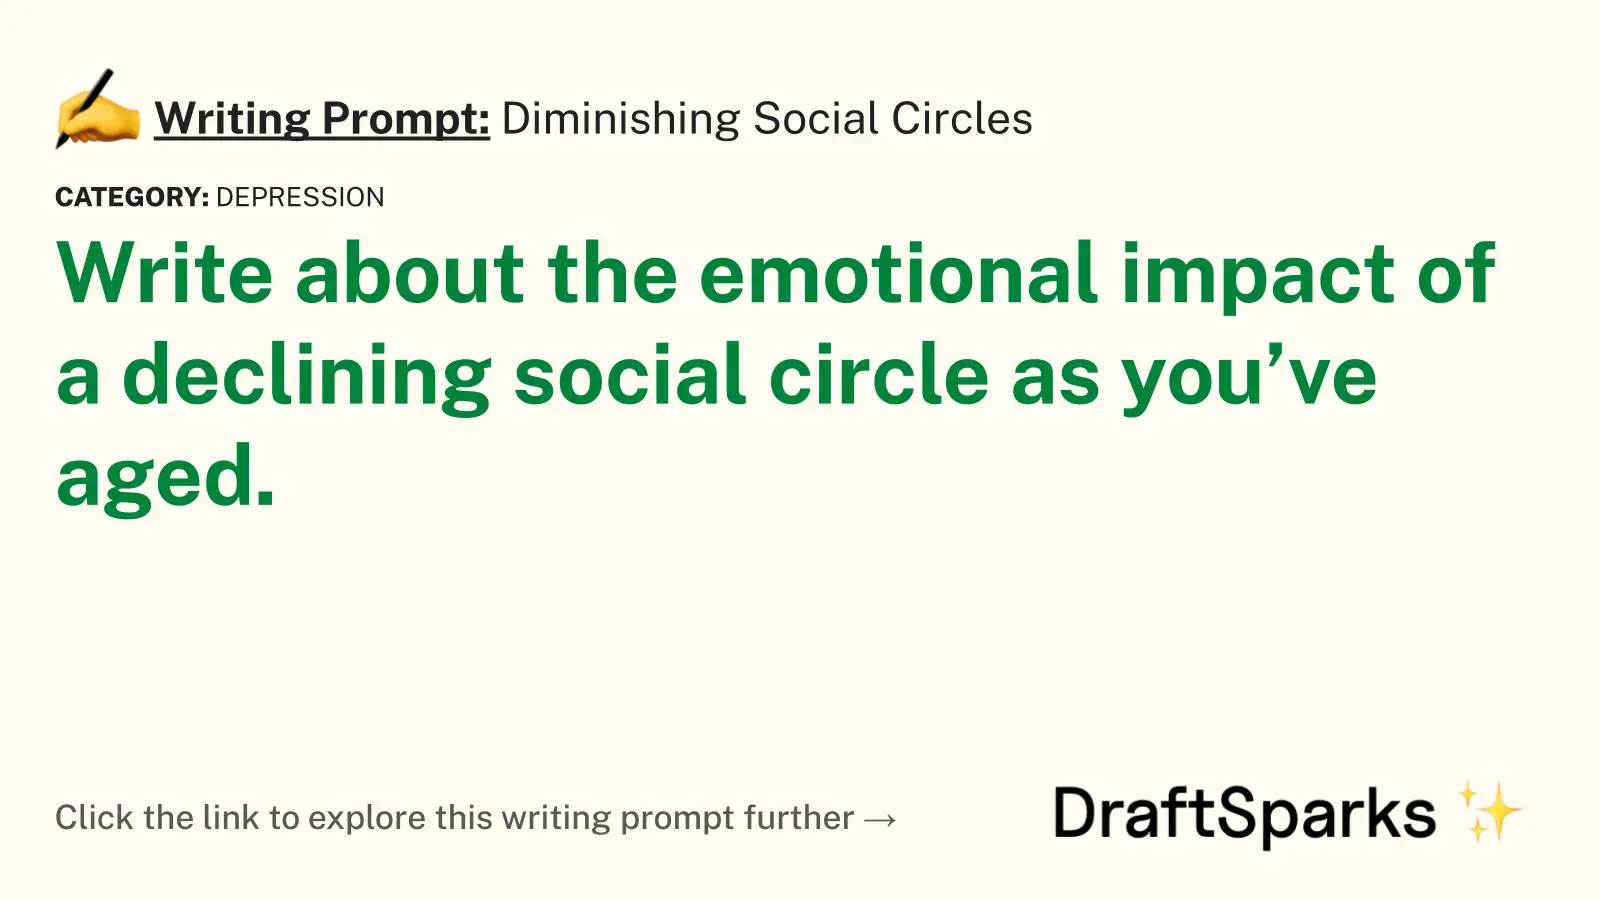 Diminishing Social Circles